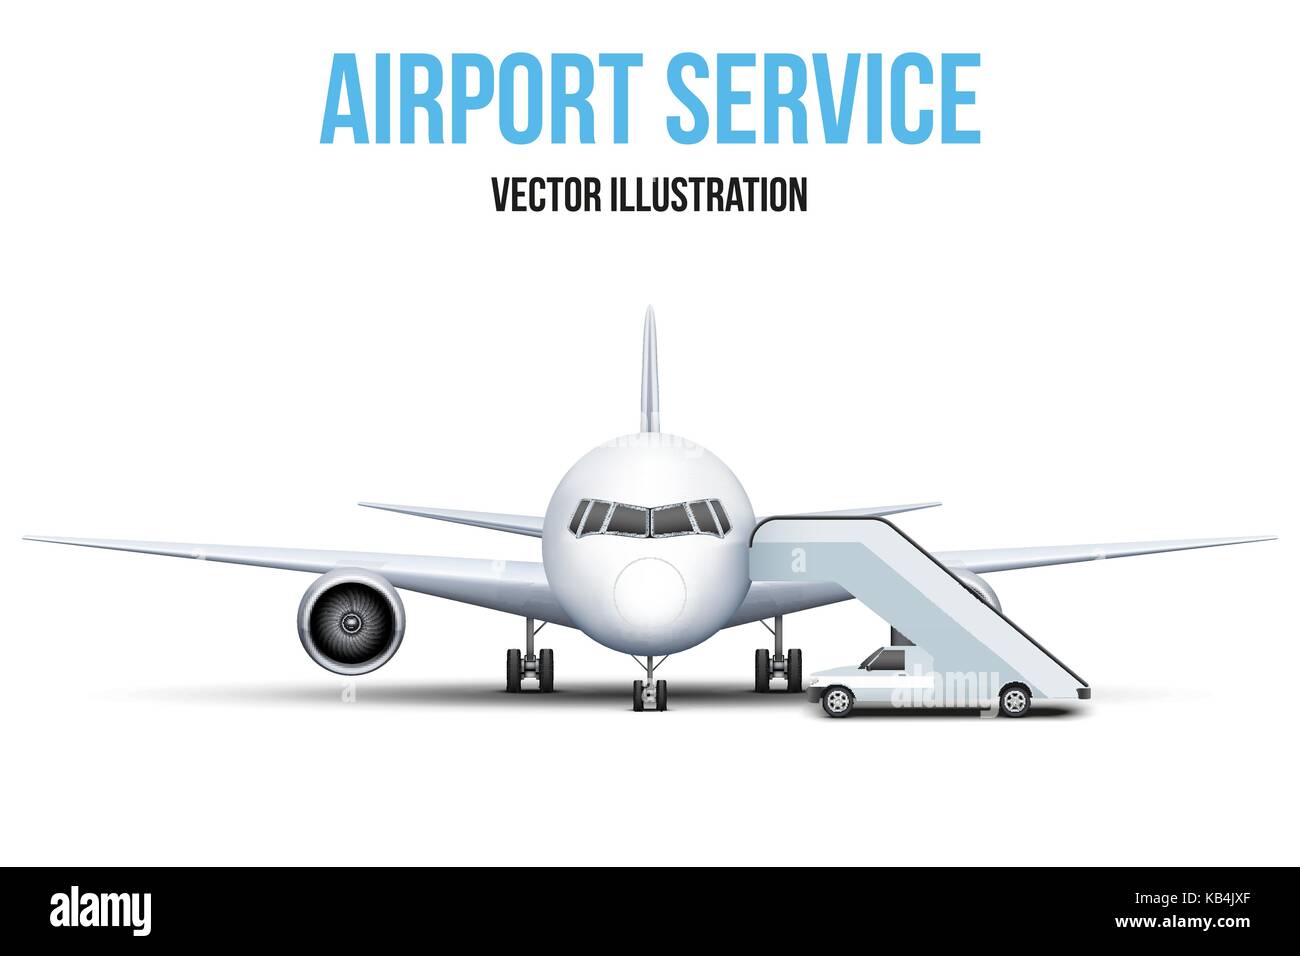 Airport service vector illustration. Stock Vector